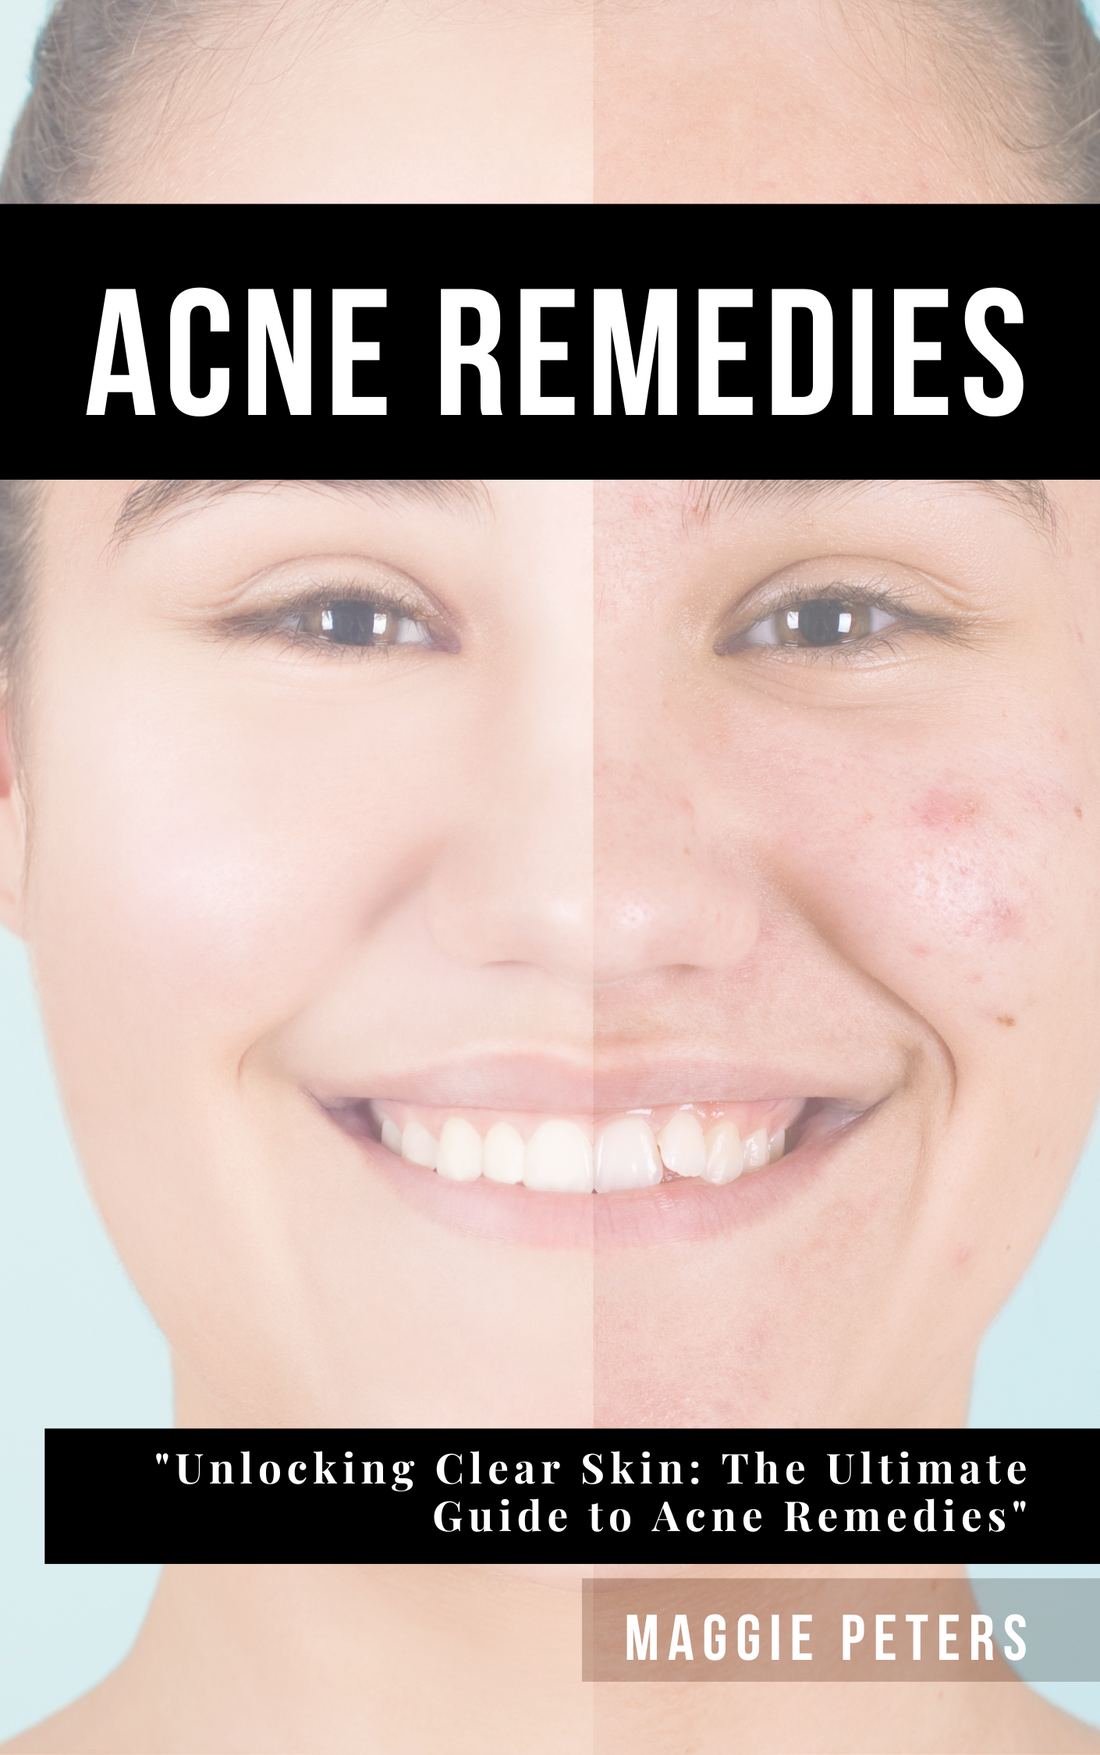 Acne remedies